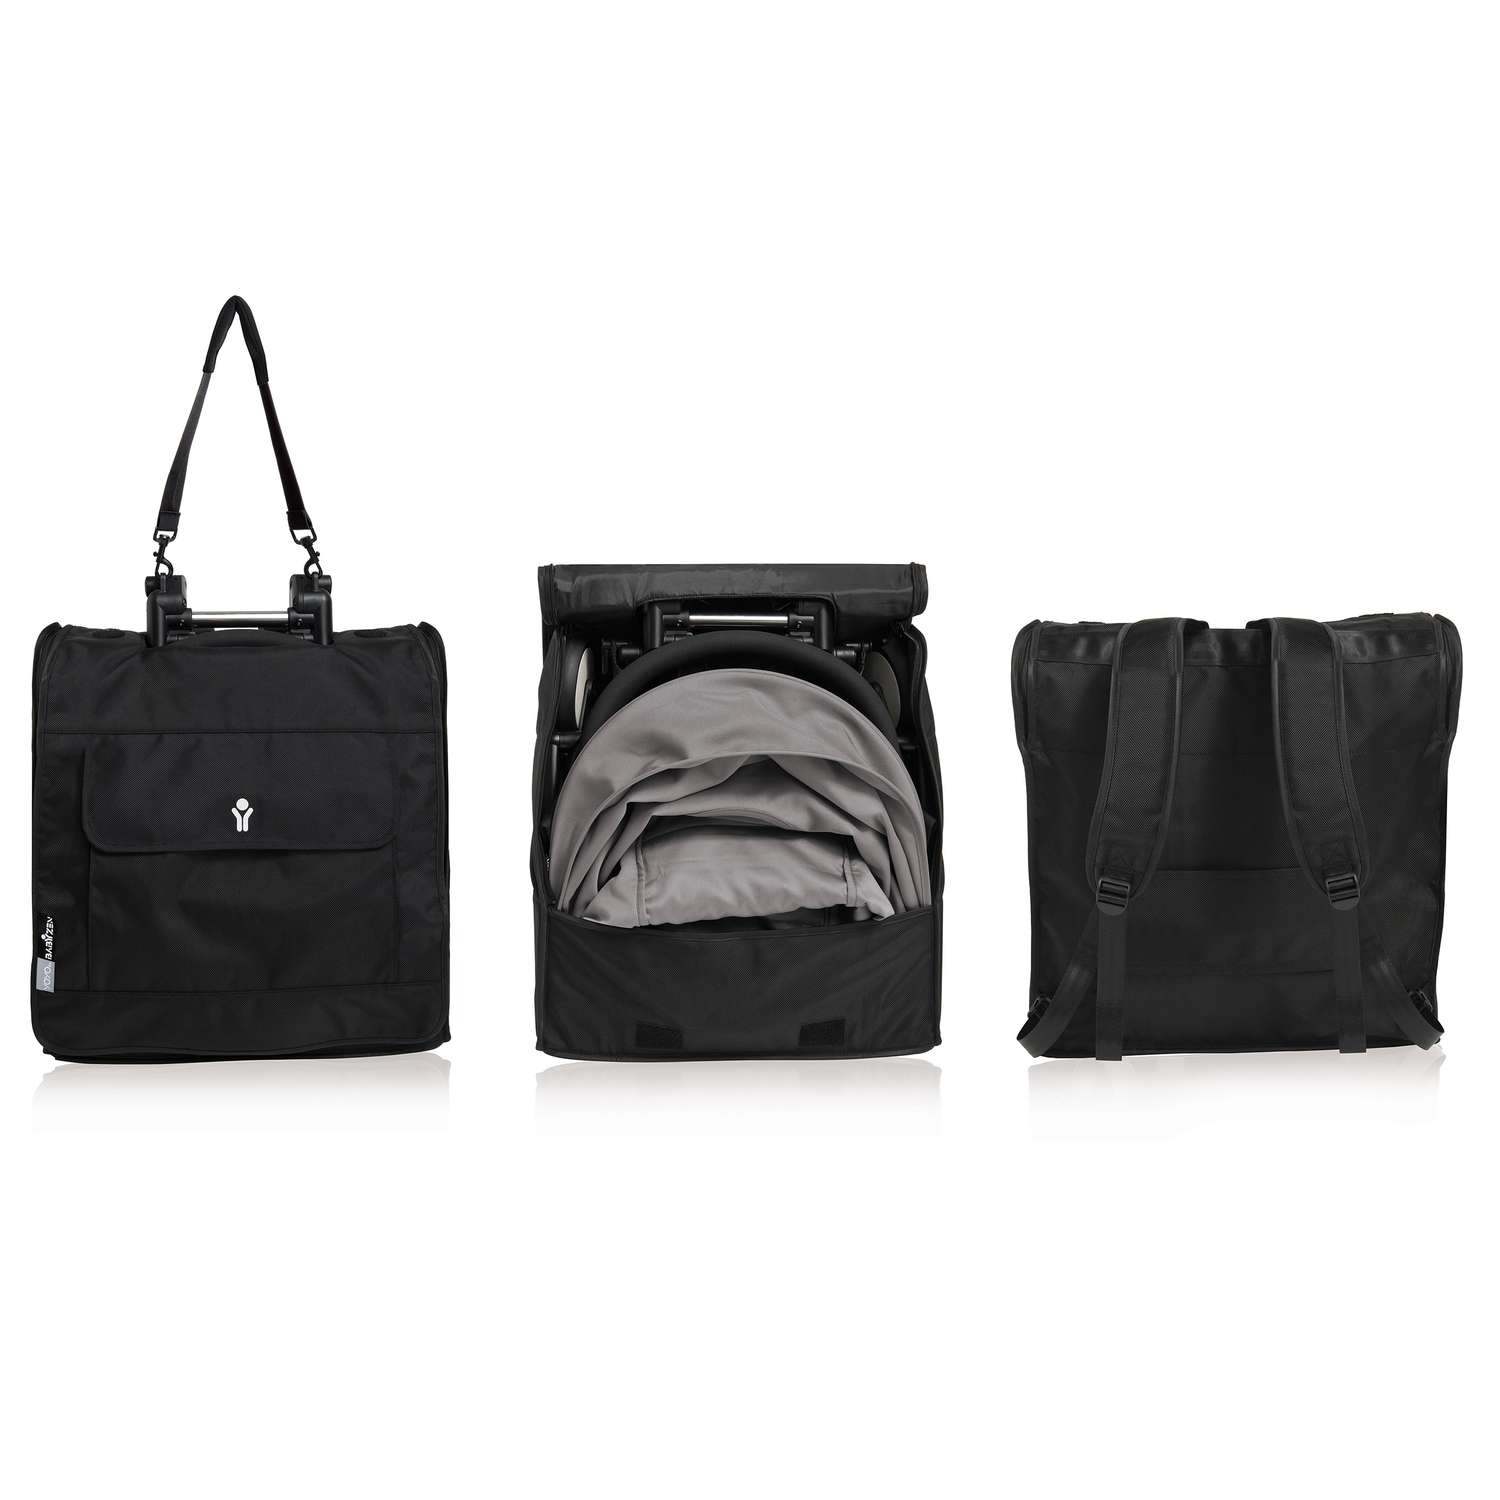 Рюкзак-сумка Babyzen для транспортировки коляски BZ10202-02 - фото 3